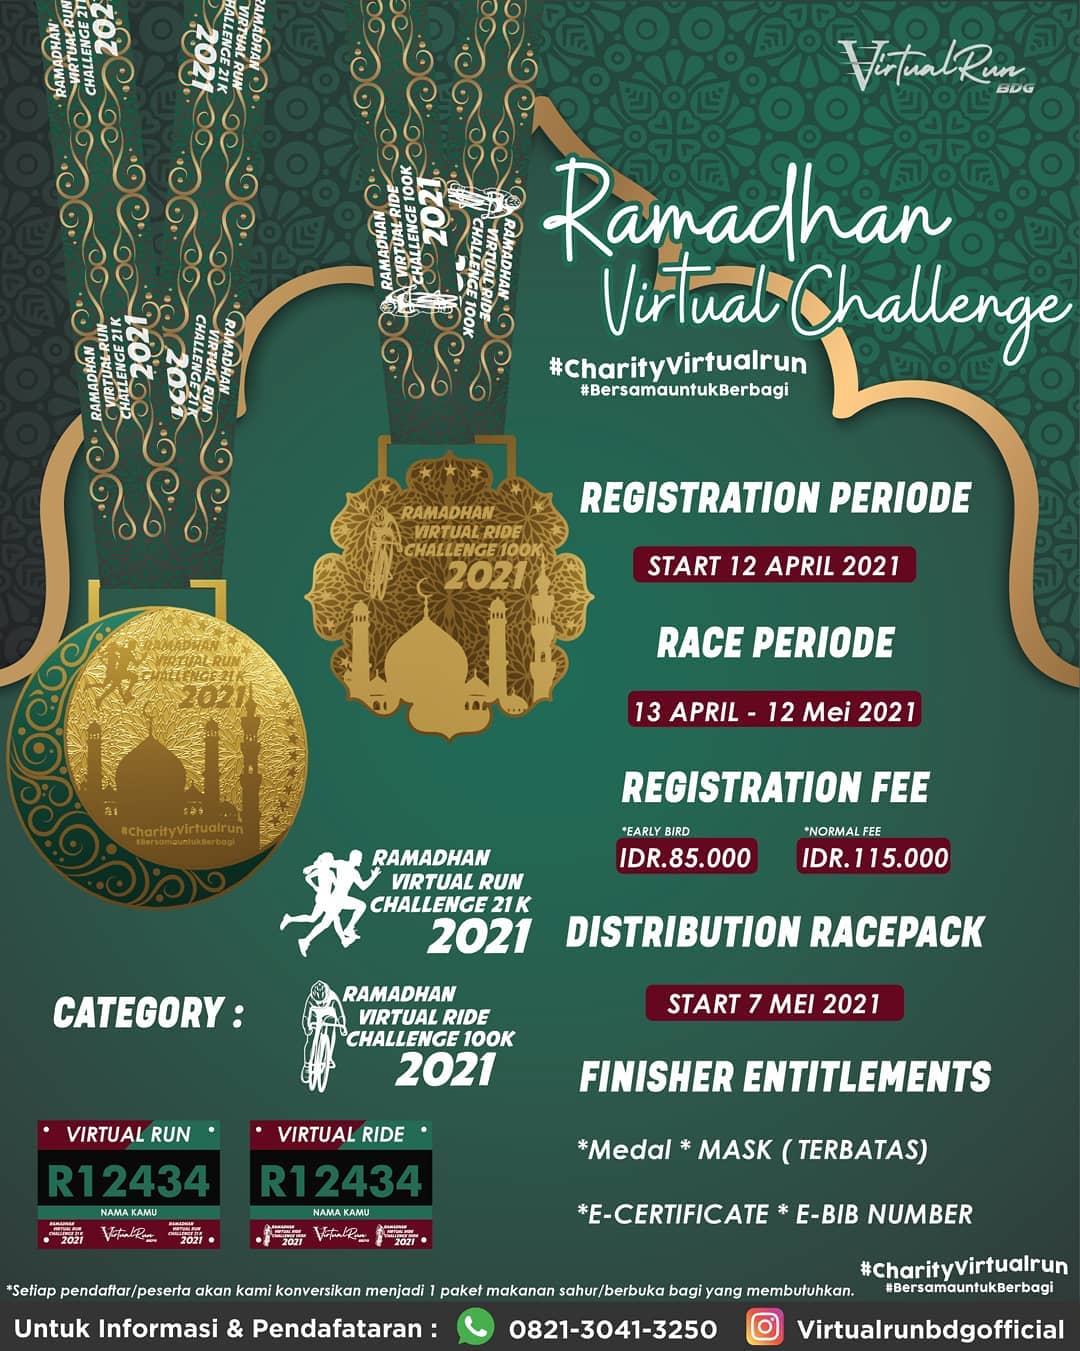 Ramadhan Virtual Challenge & Charity â€¢ 2021